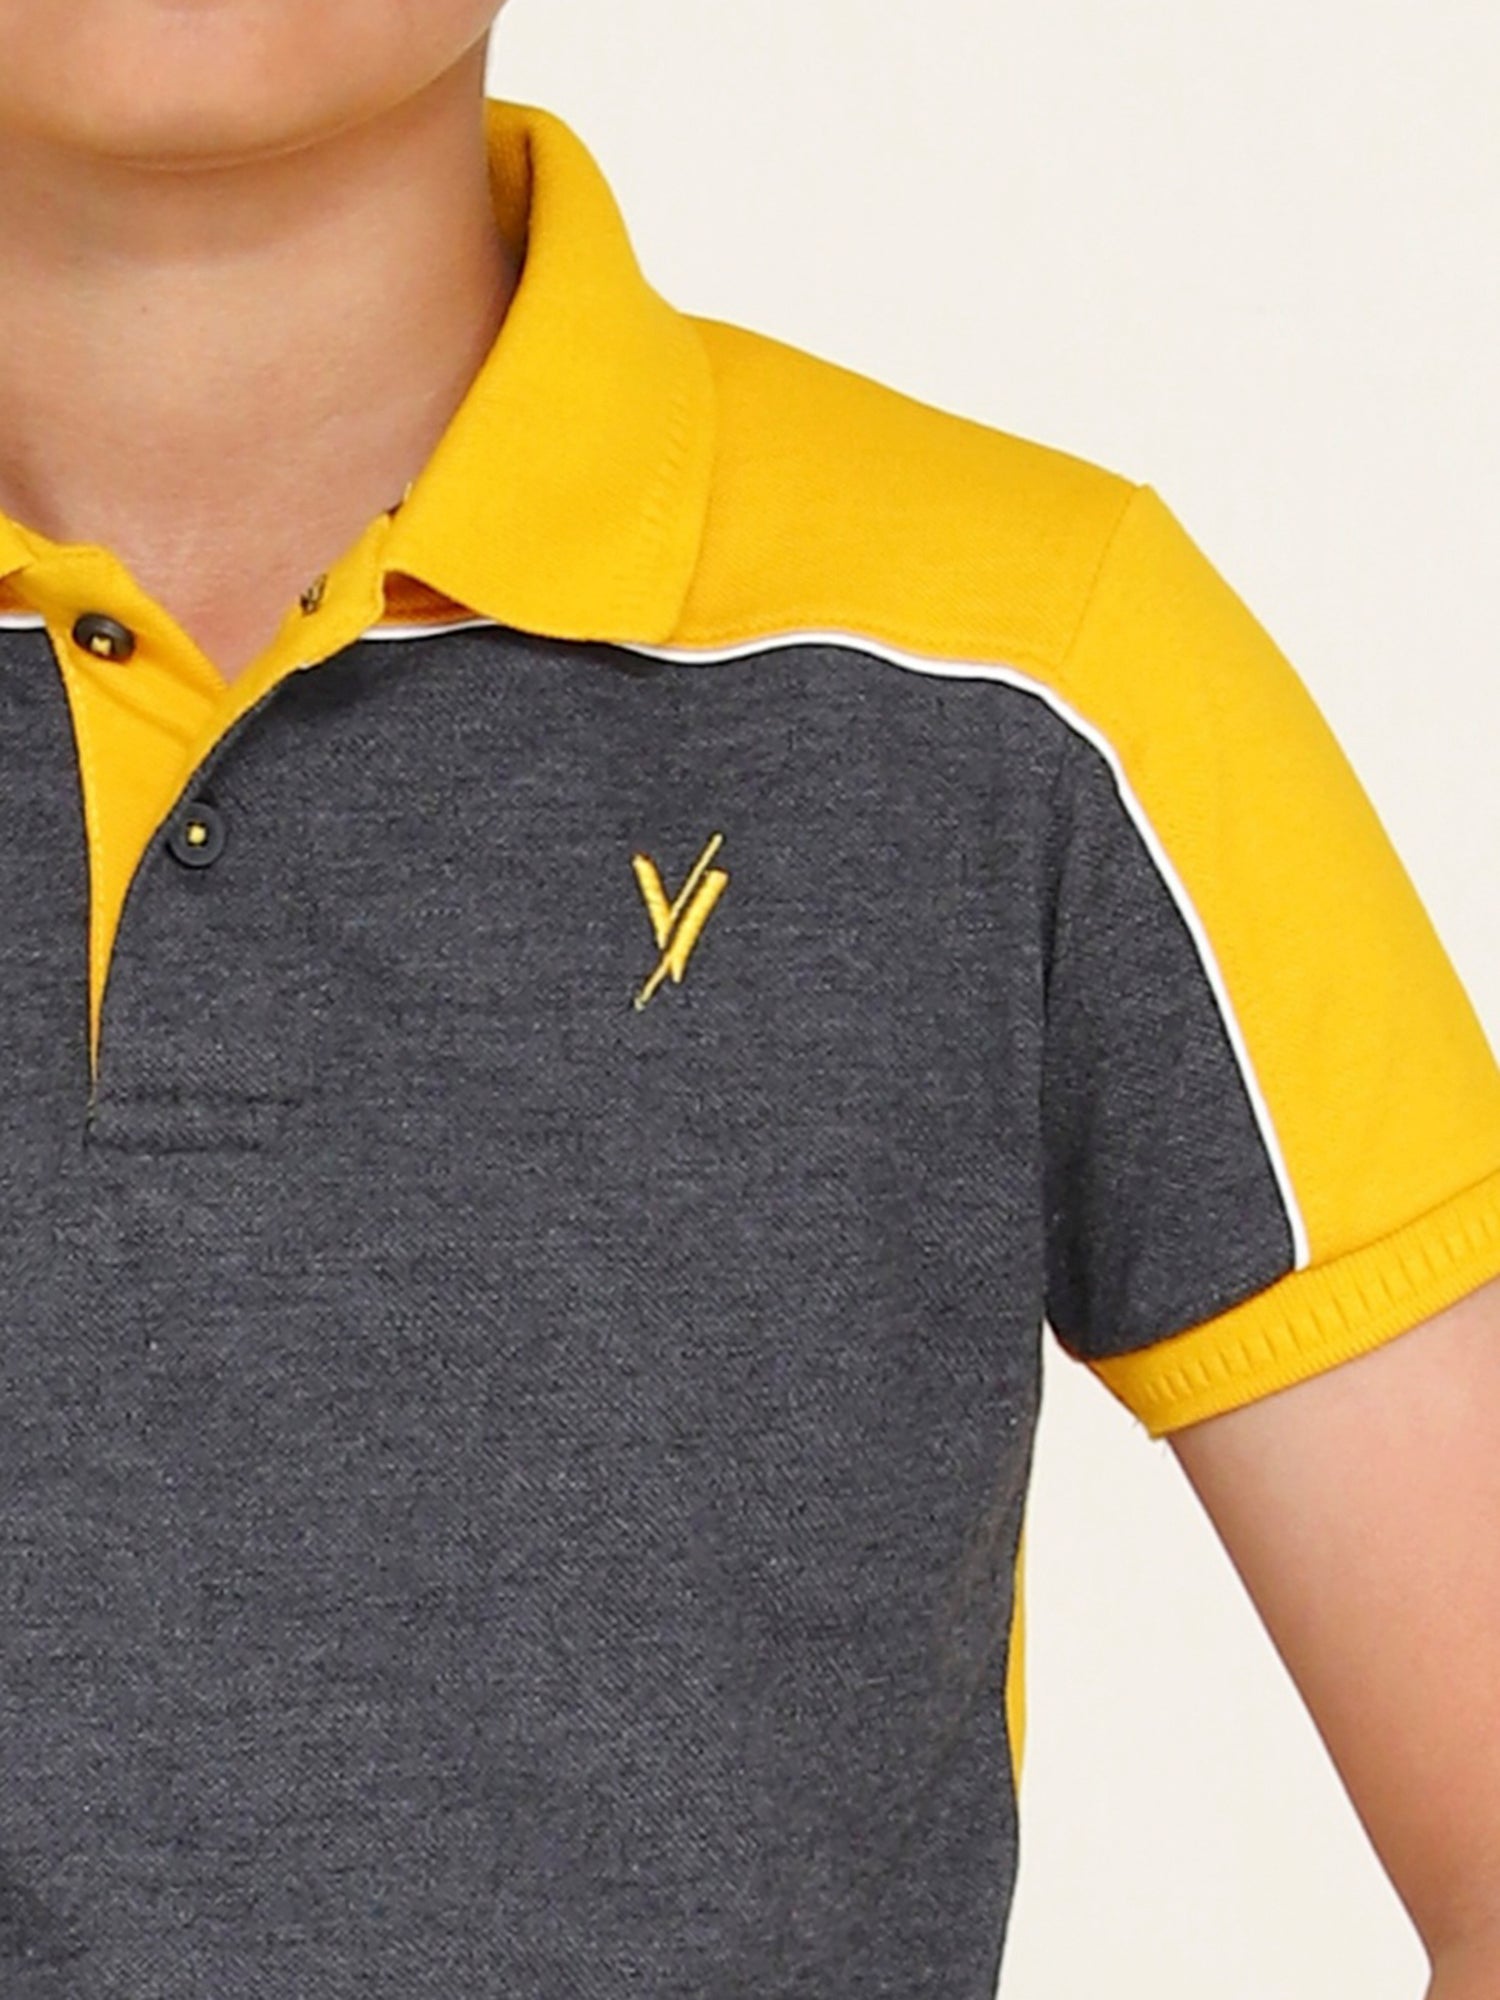 Boys Polo Shirt (Short Sleeve) By Velvour Art# VBP03-A - Velvour Shop